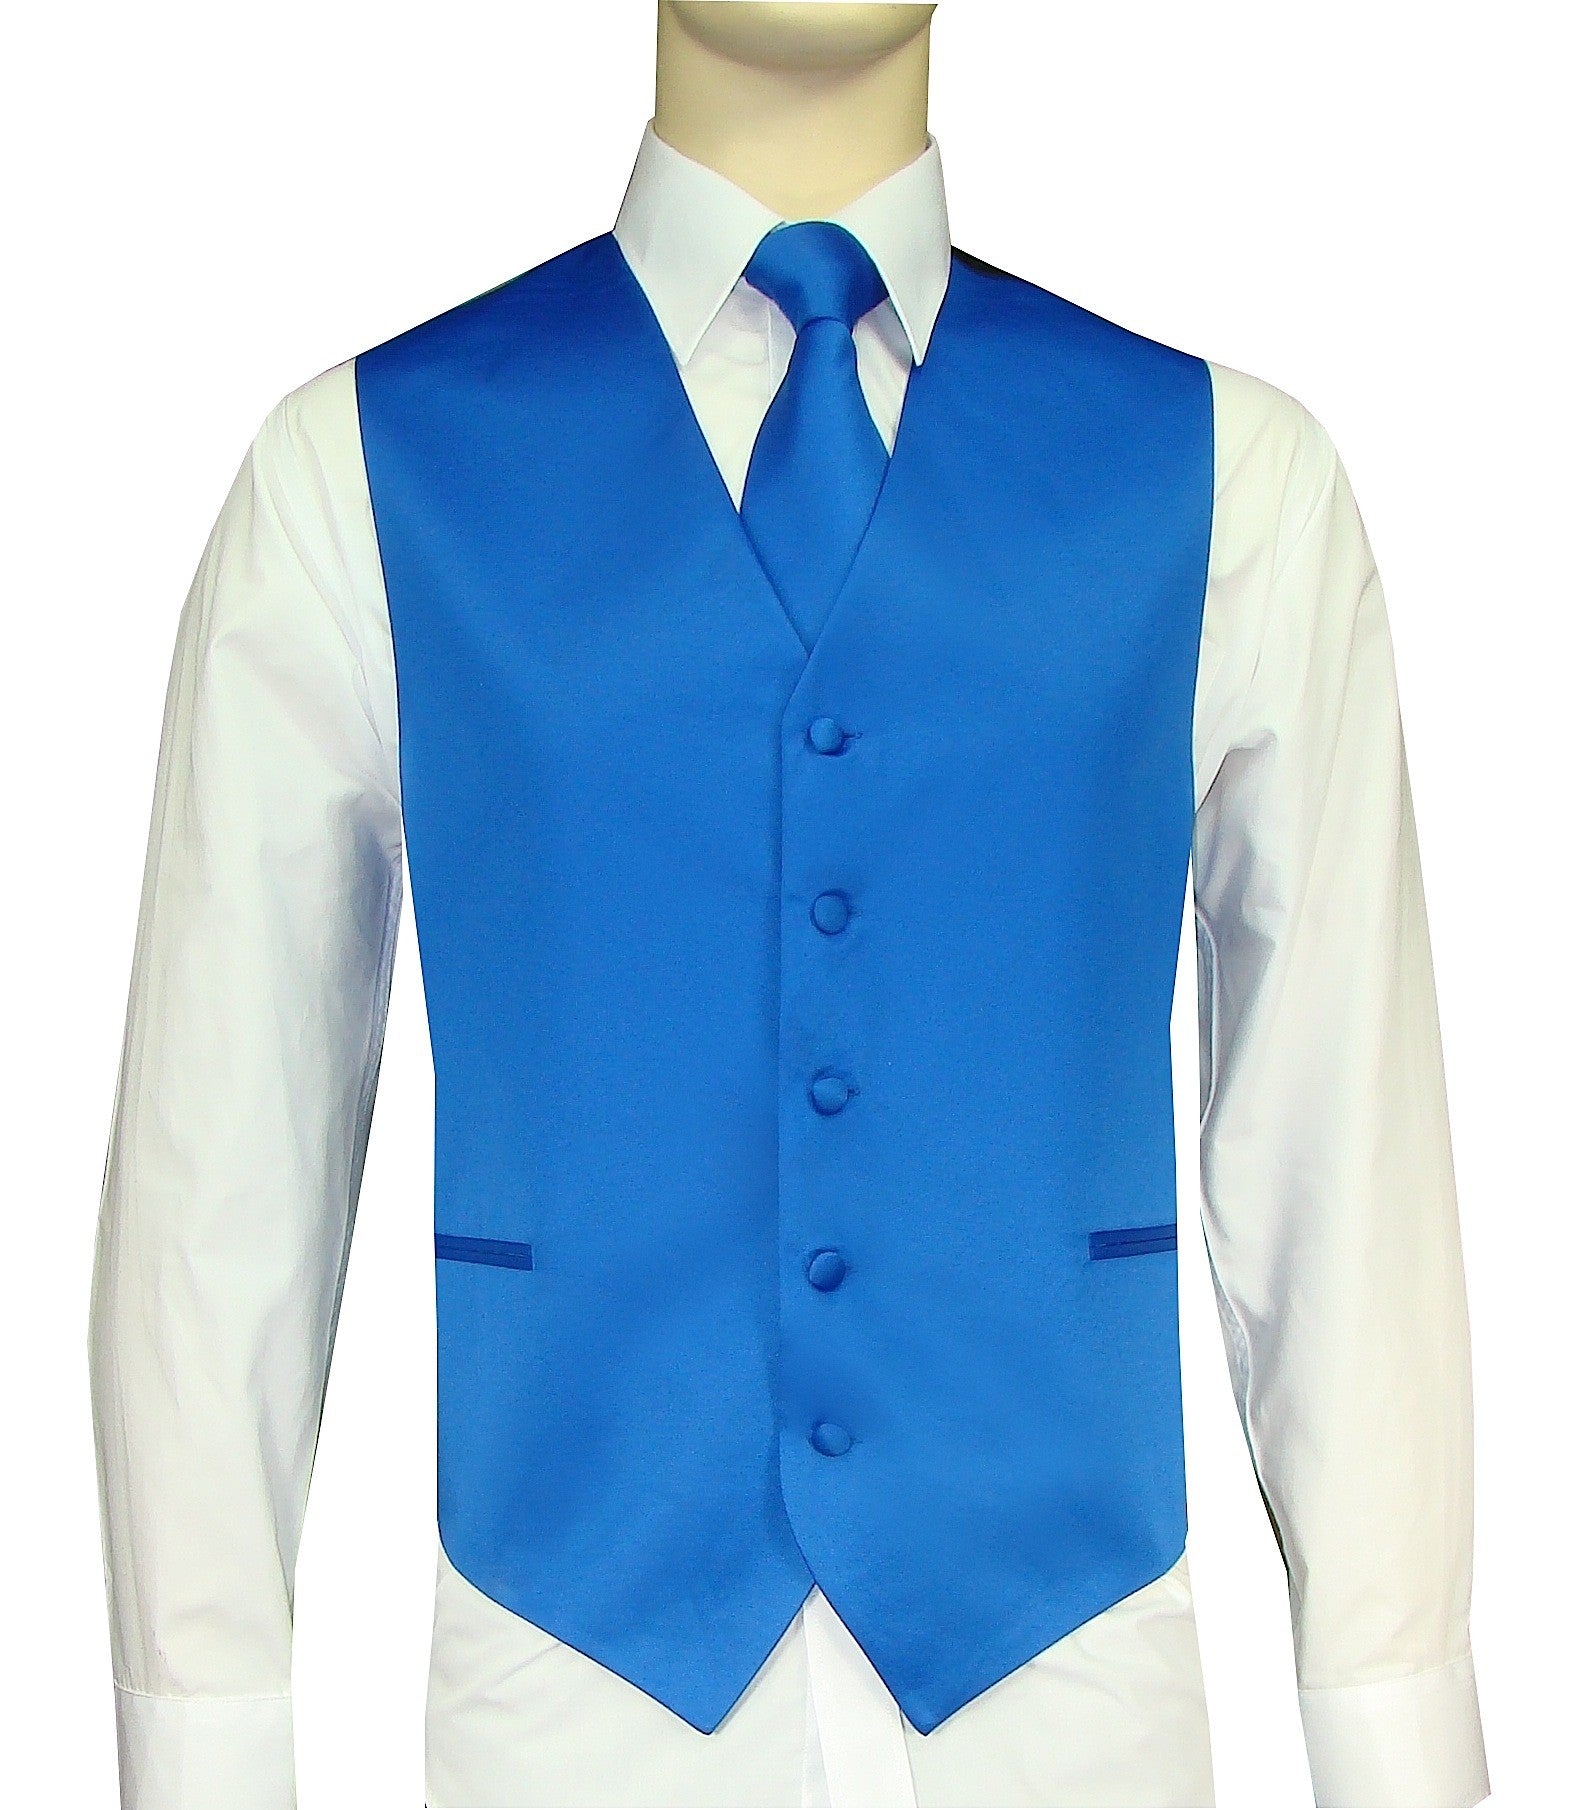 KCT Menswear Royal Blue Vest and Tie Set, formal vest and tie set, groom and groomsmen vest and tie set, solid color vest and tie set, formal wear vest and tie set, special occasion vest and tie set.